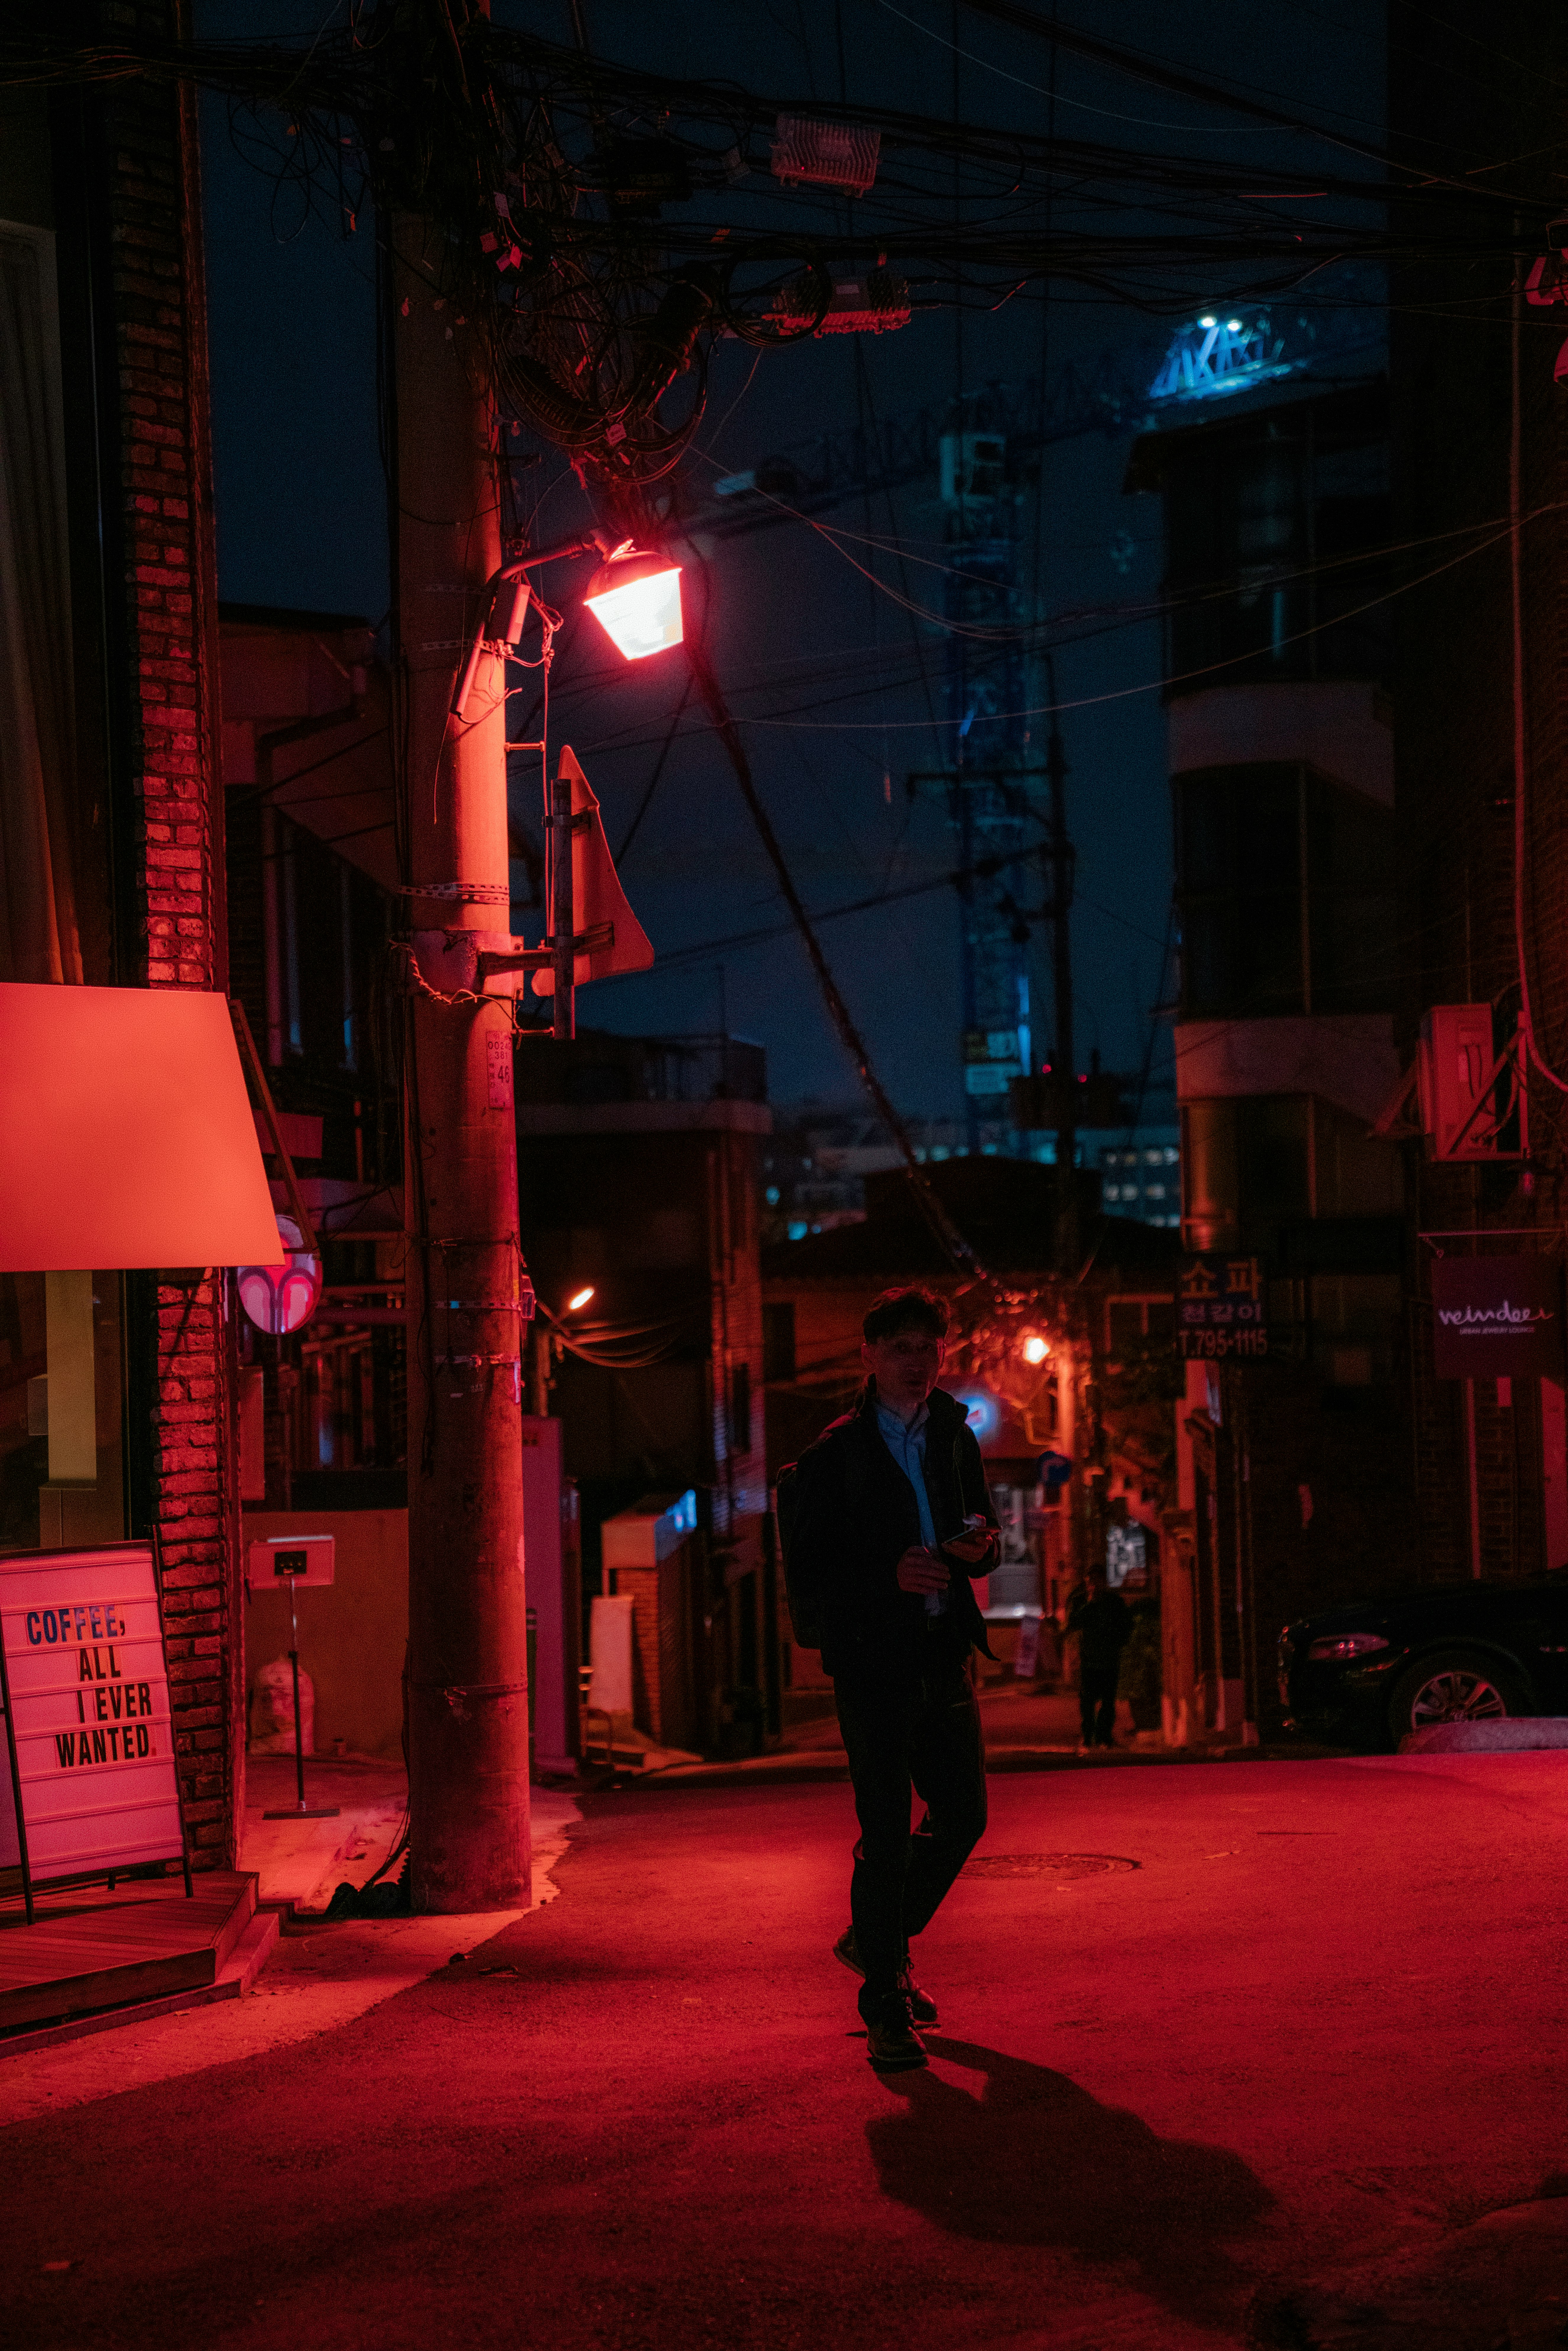 man in black jacket and pants walking on street during night time